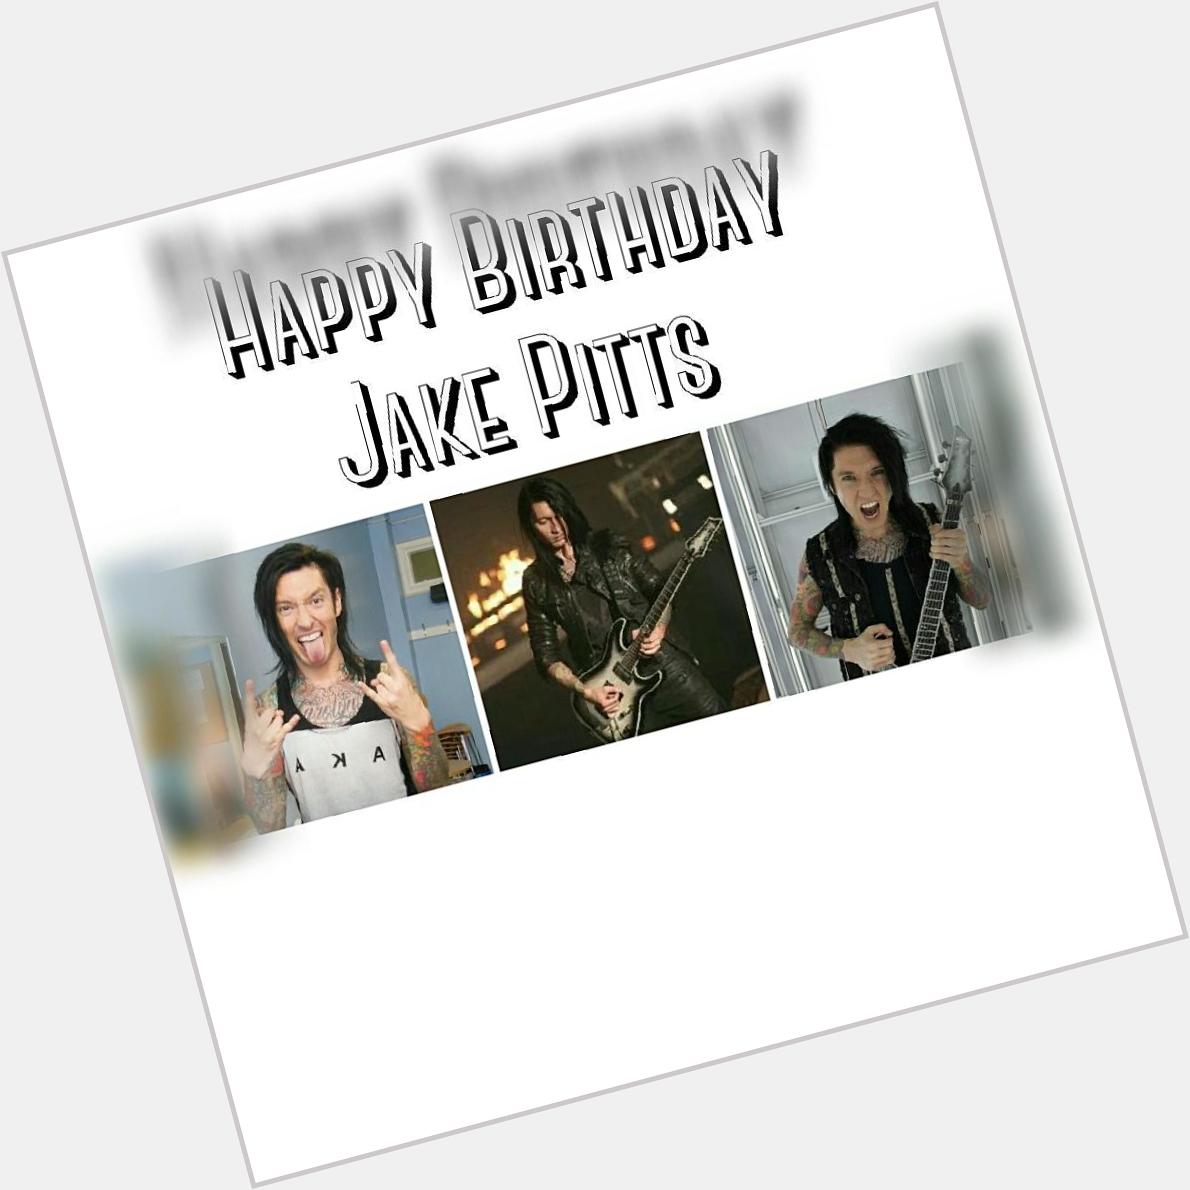 Happy Birthday Jake Pitts      Jacob Mark Pitts         